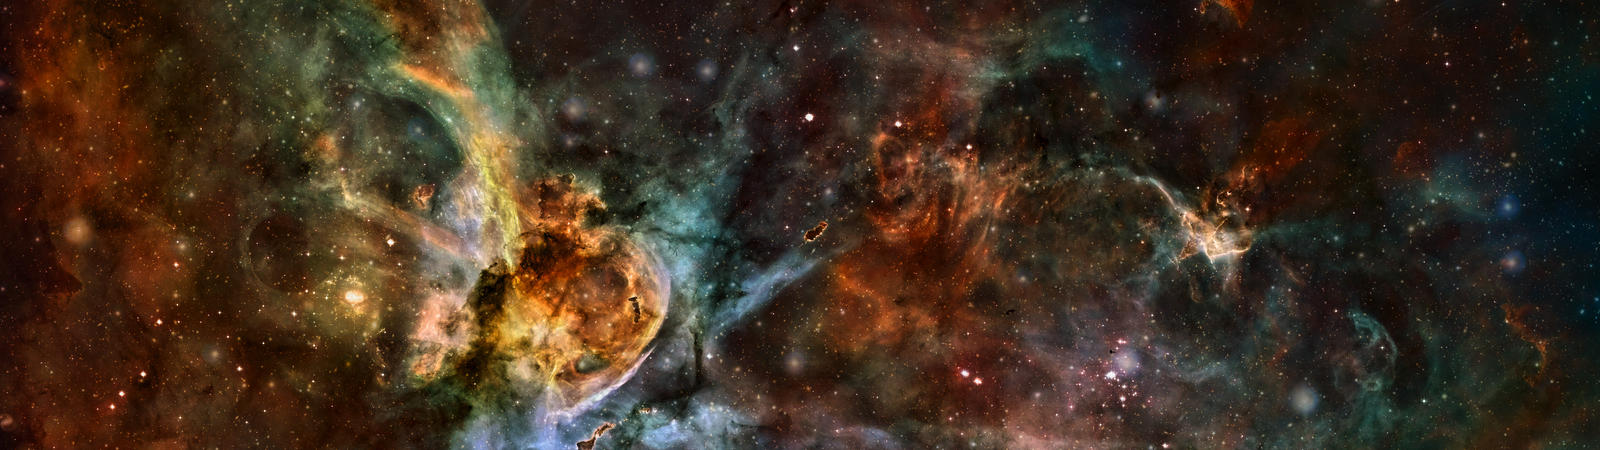 Carina Nebula meets COSMOS field